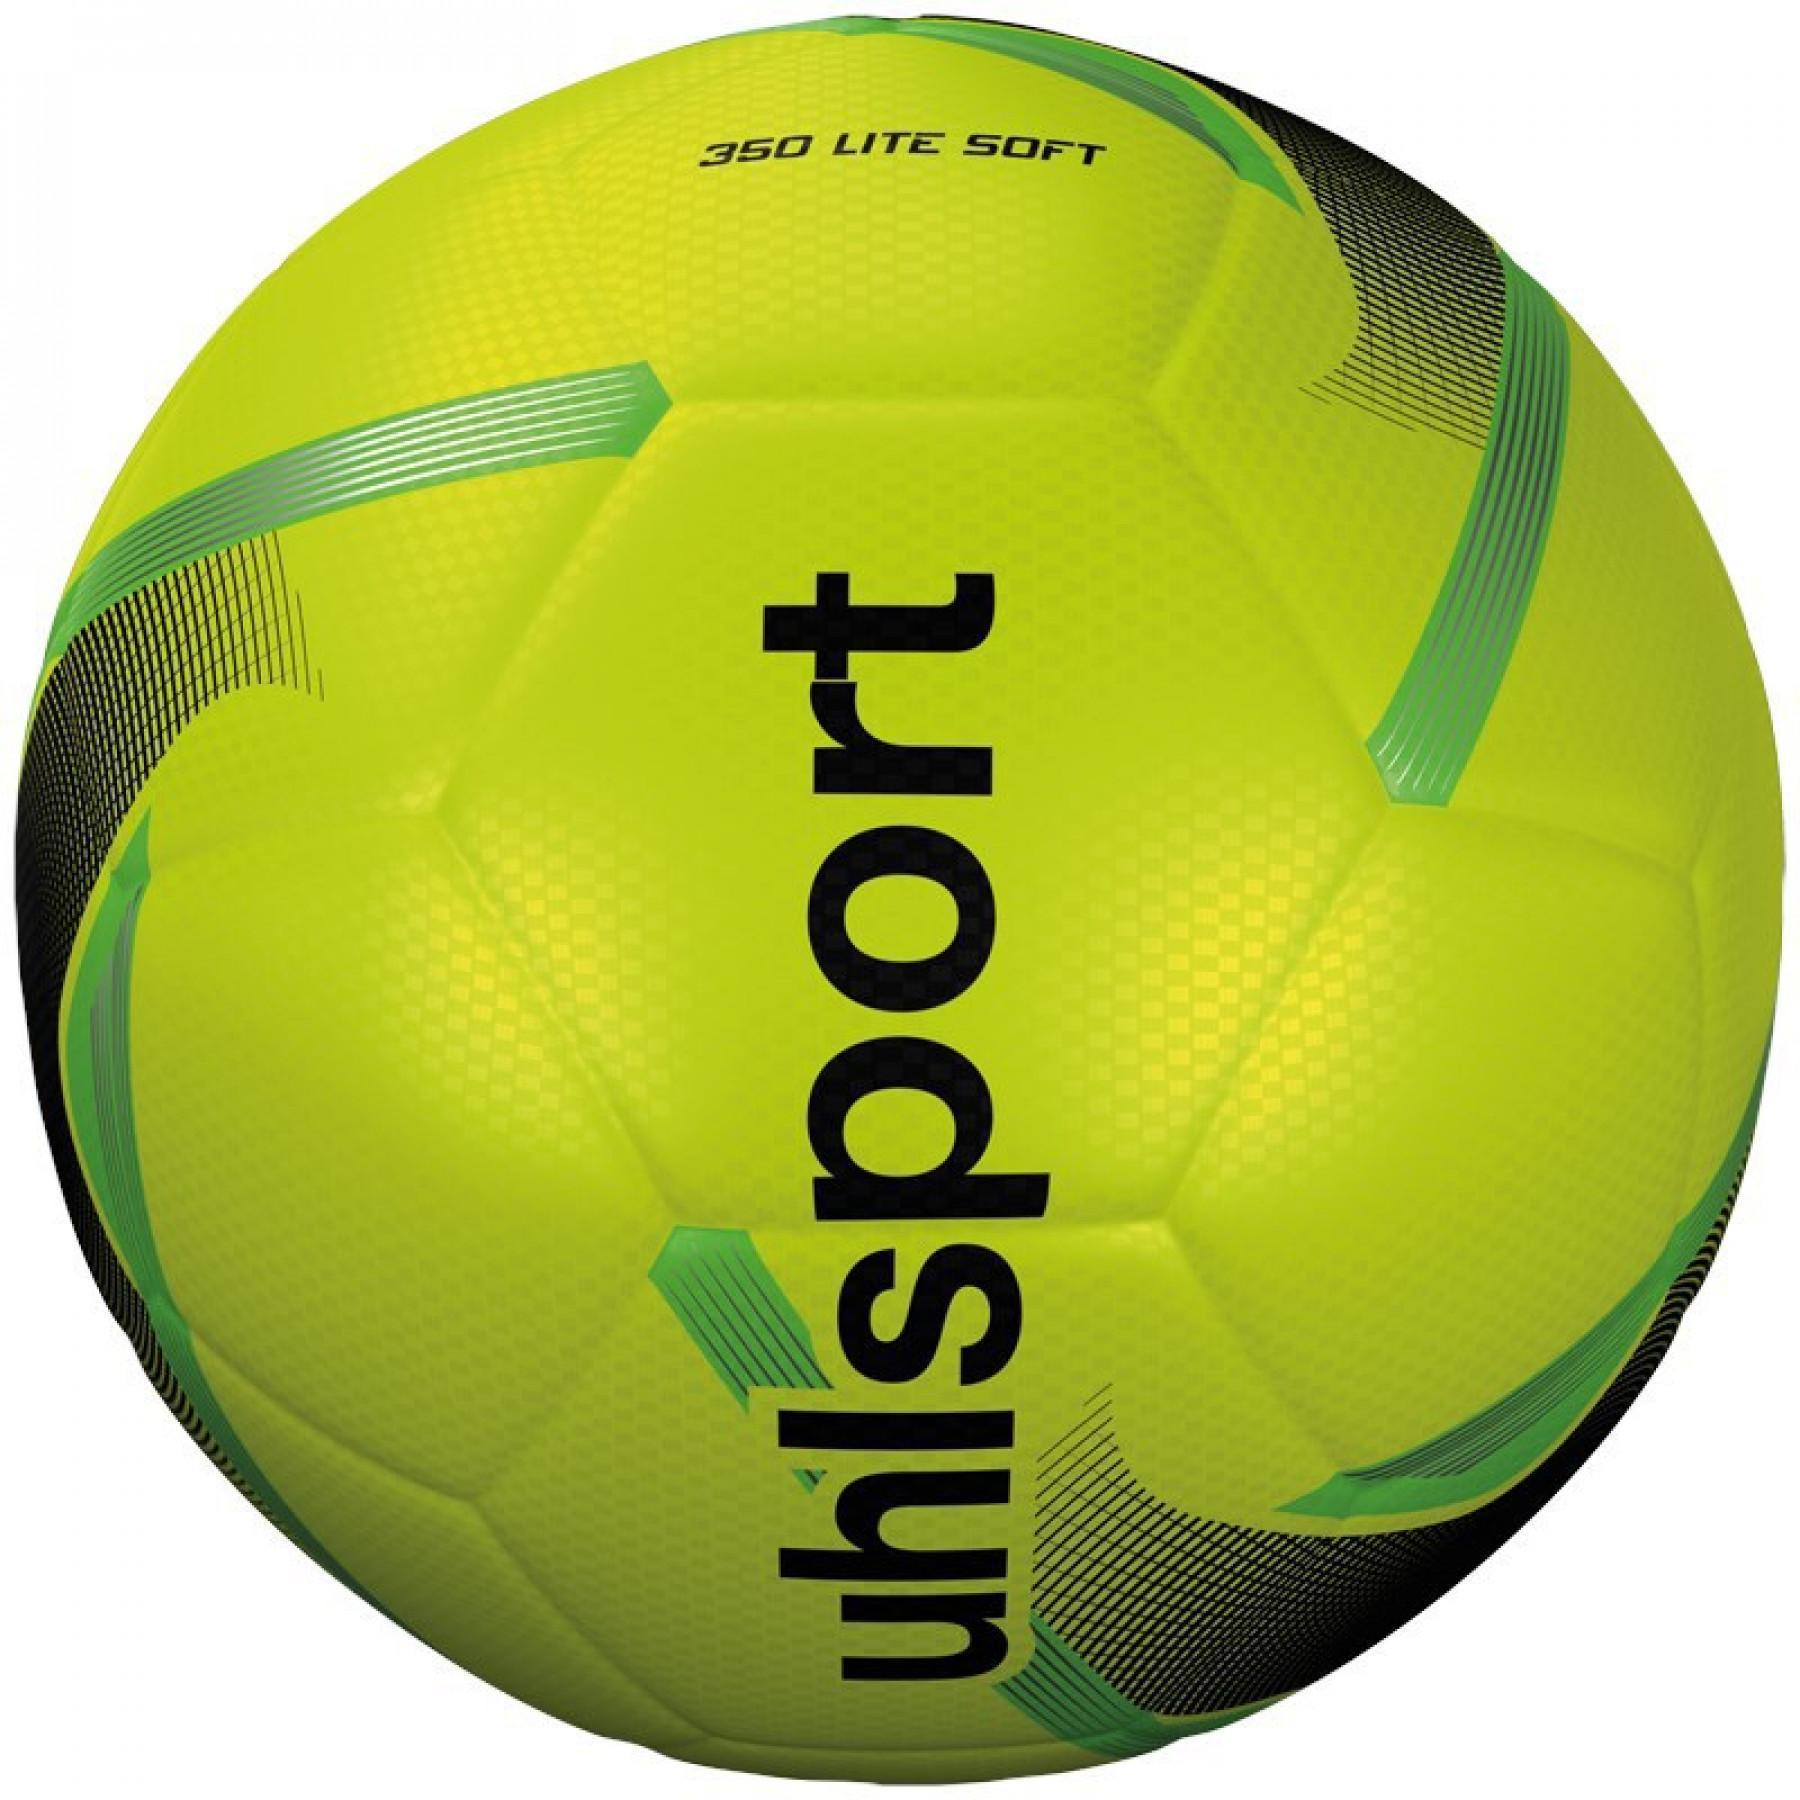 Kinderball Uhlsport 350 Lite Soft